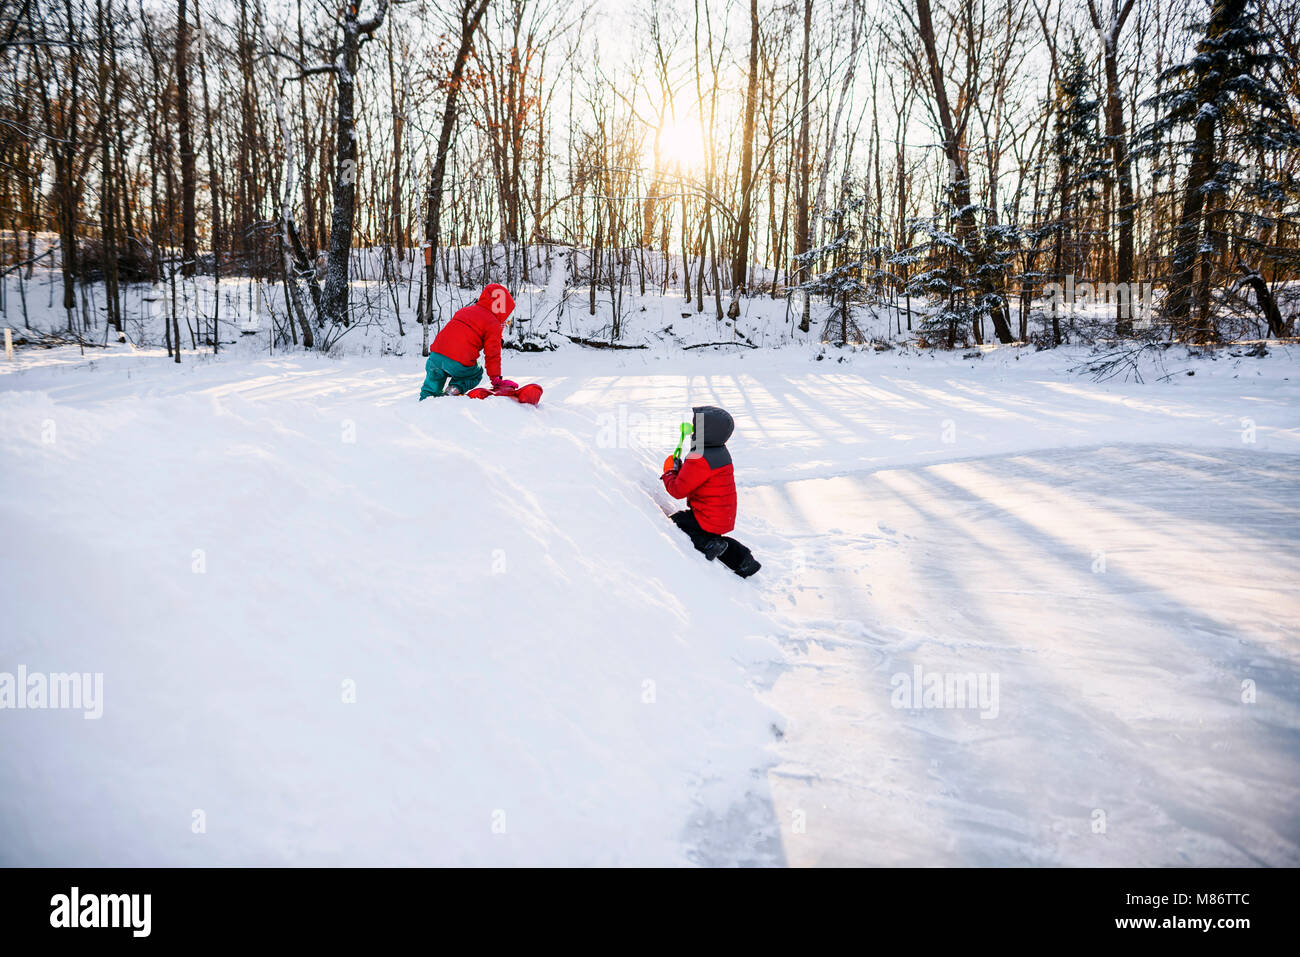 Two boys ice fishing on a frozen lake. Stock Illustration by ©AlexBannykh  #31115139